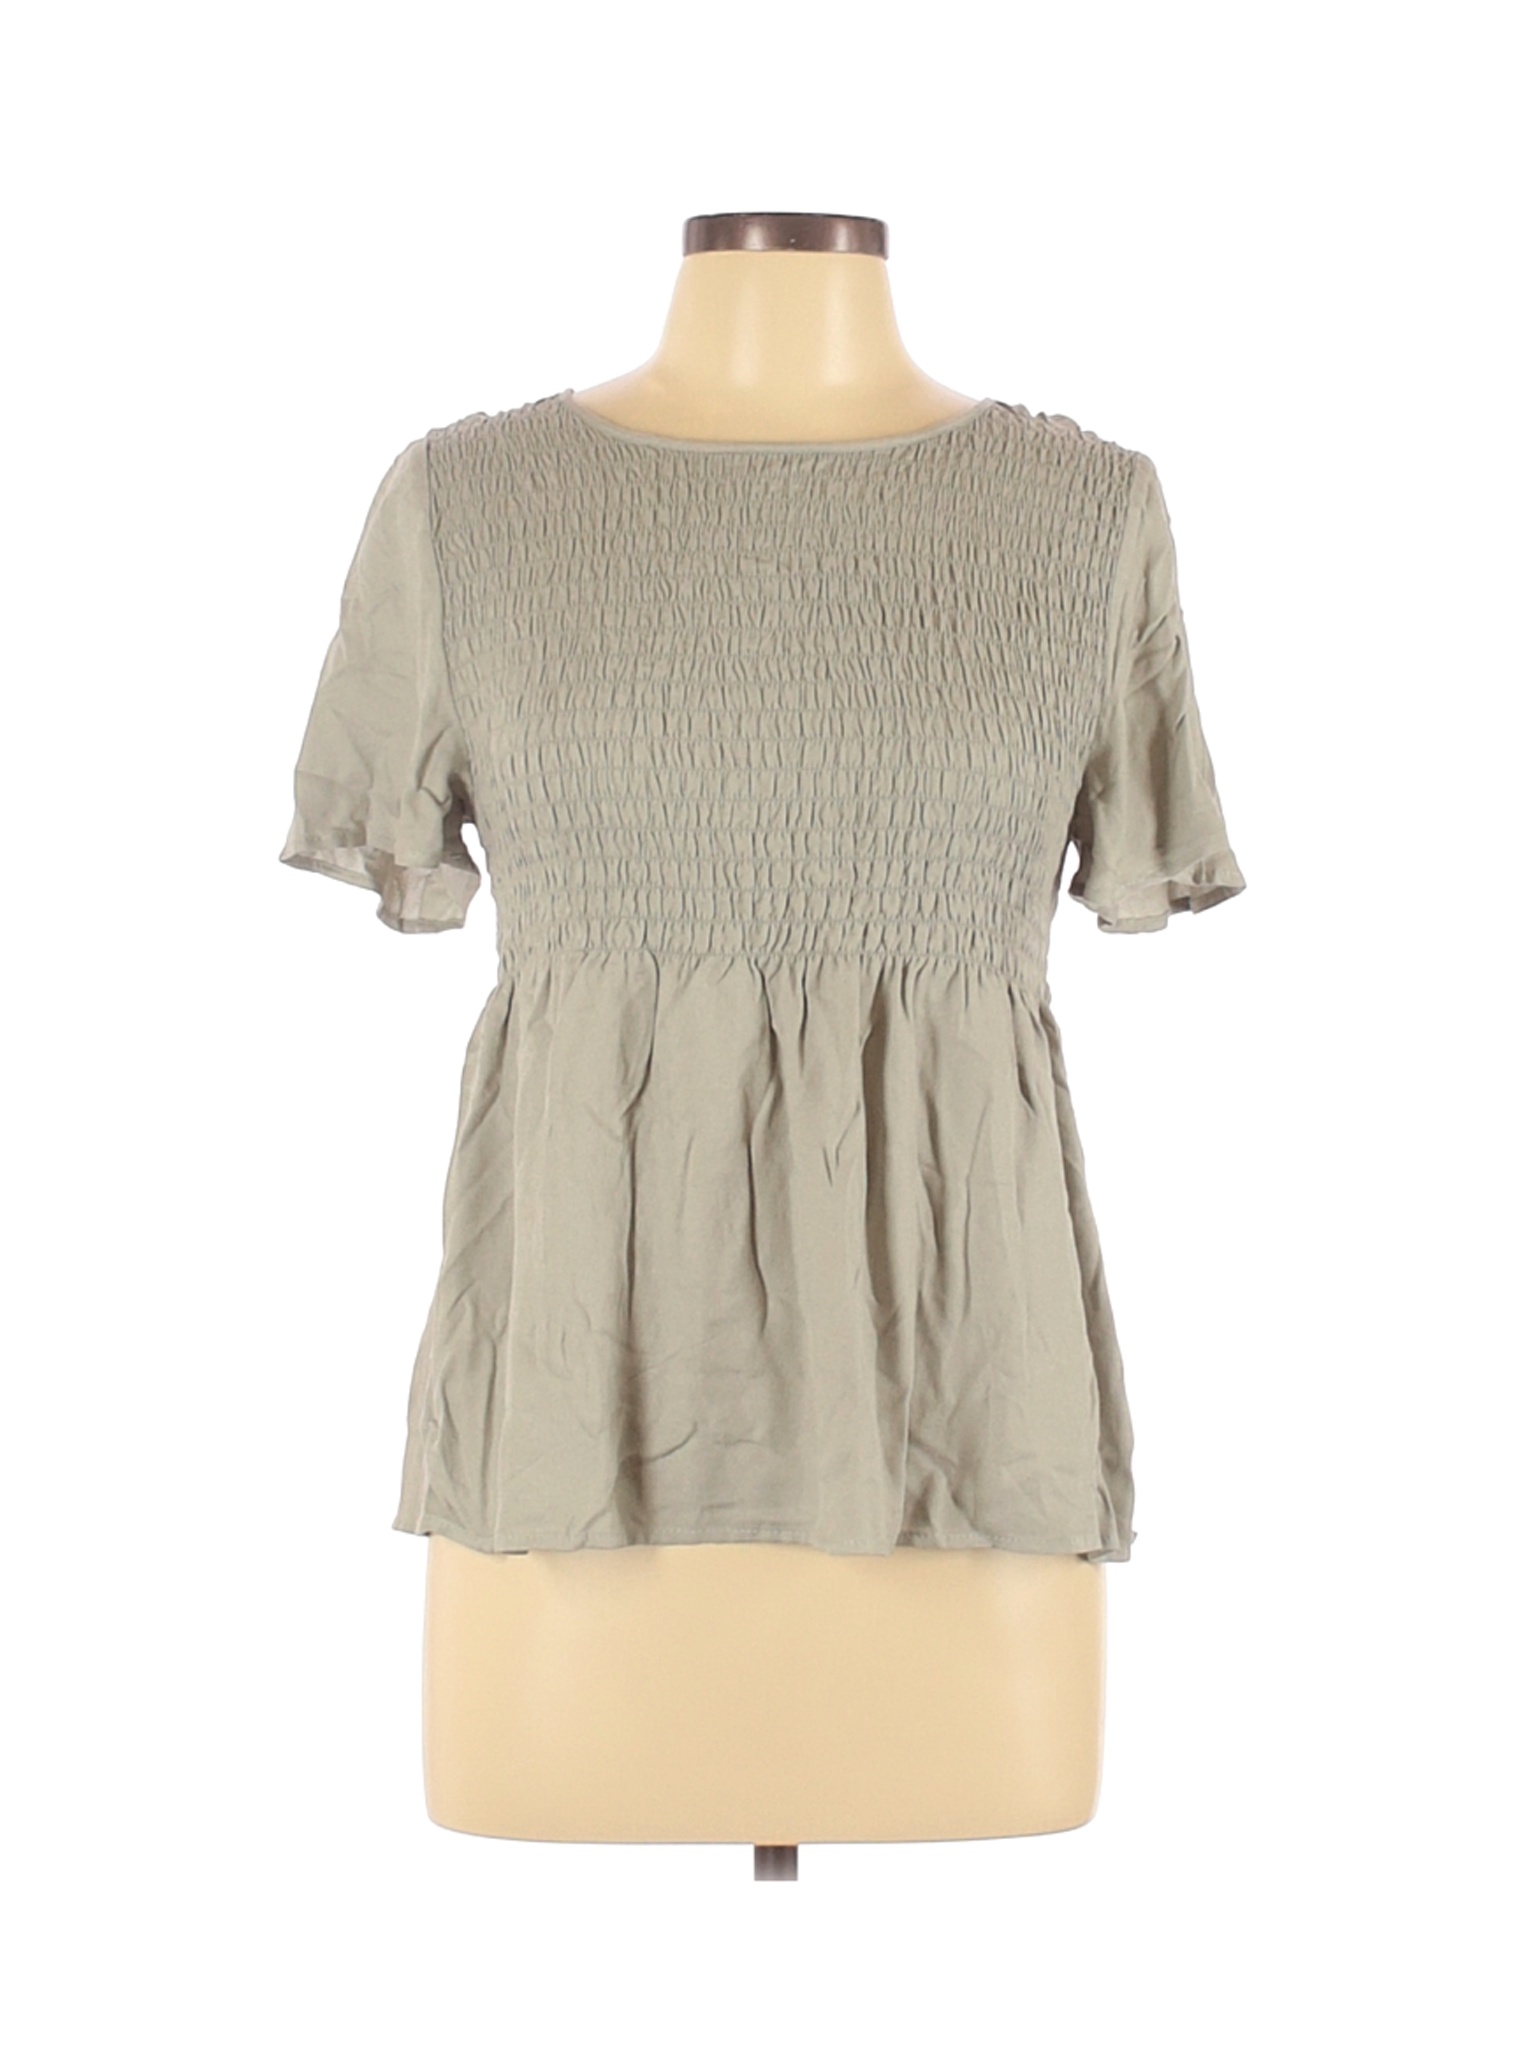 Urban Romantics Women Green Short Sleeve Blouse L | eBay